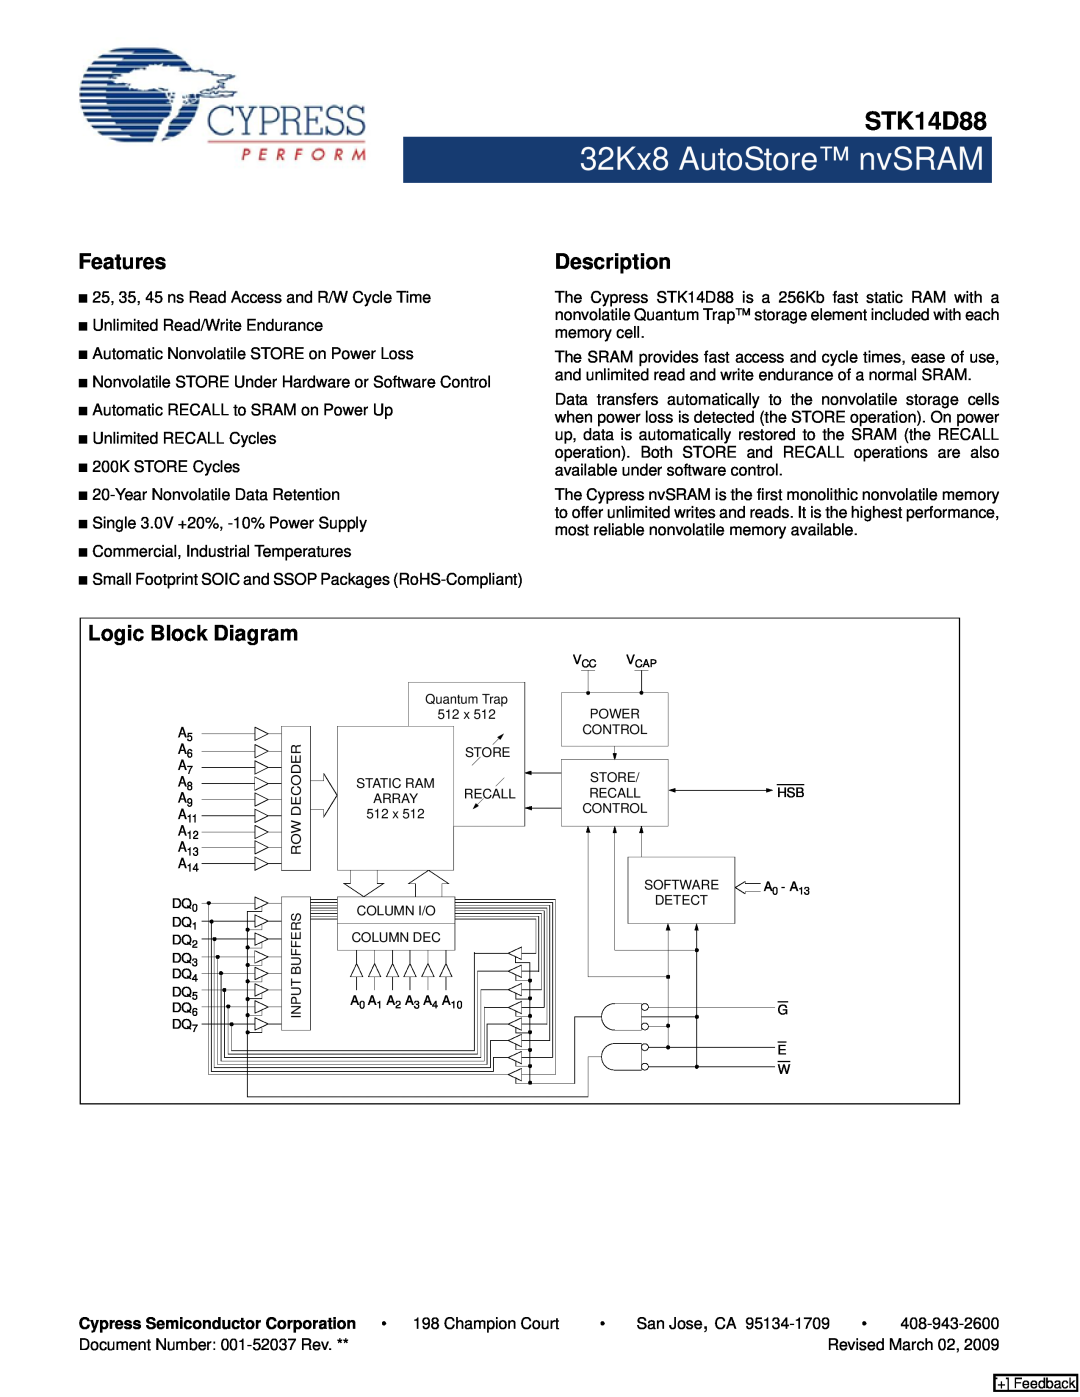 Cypress STK14D88 manual Features, Description, Logic Block Diagram, 32Kx8 AutoStore nvSRAM 